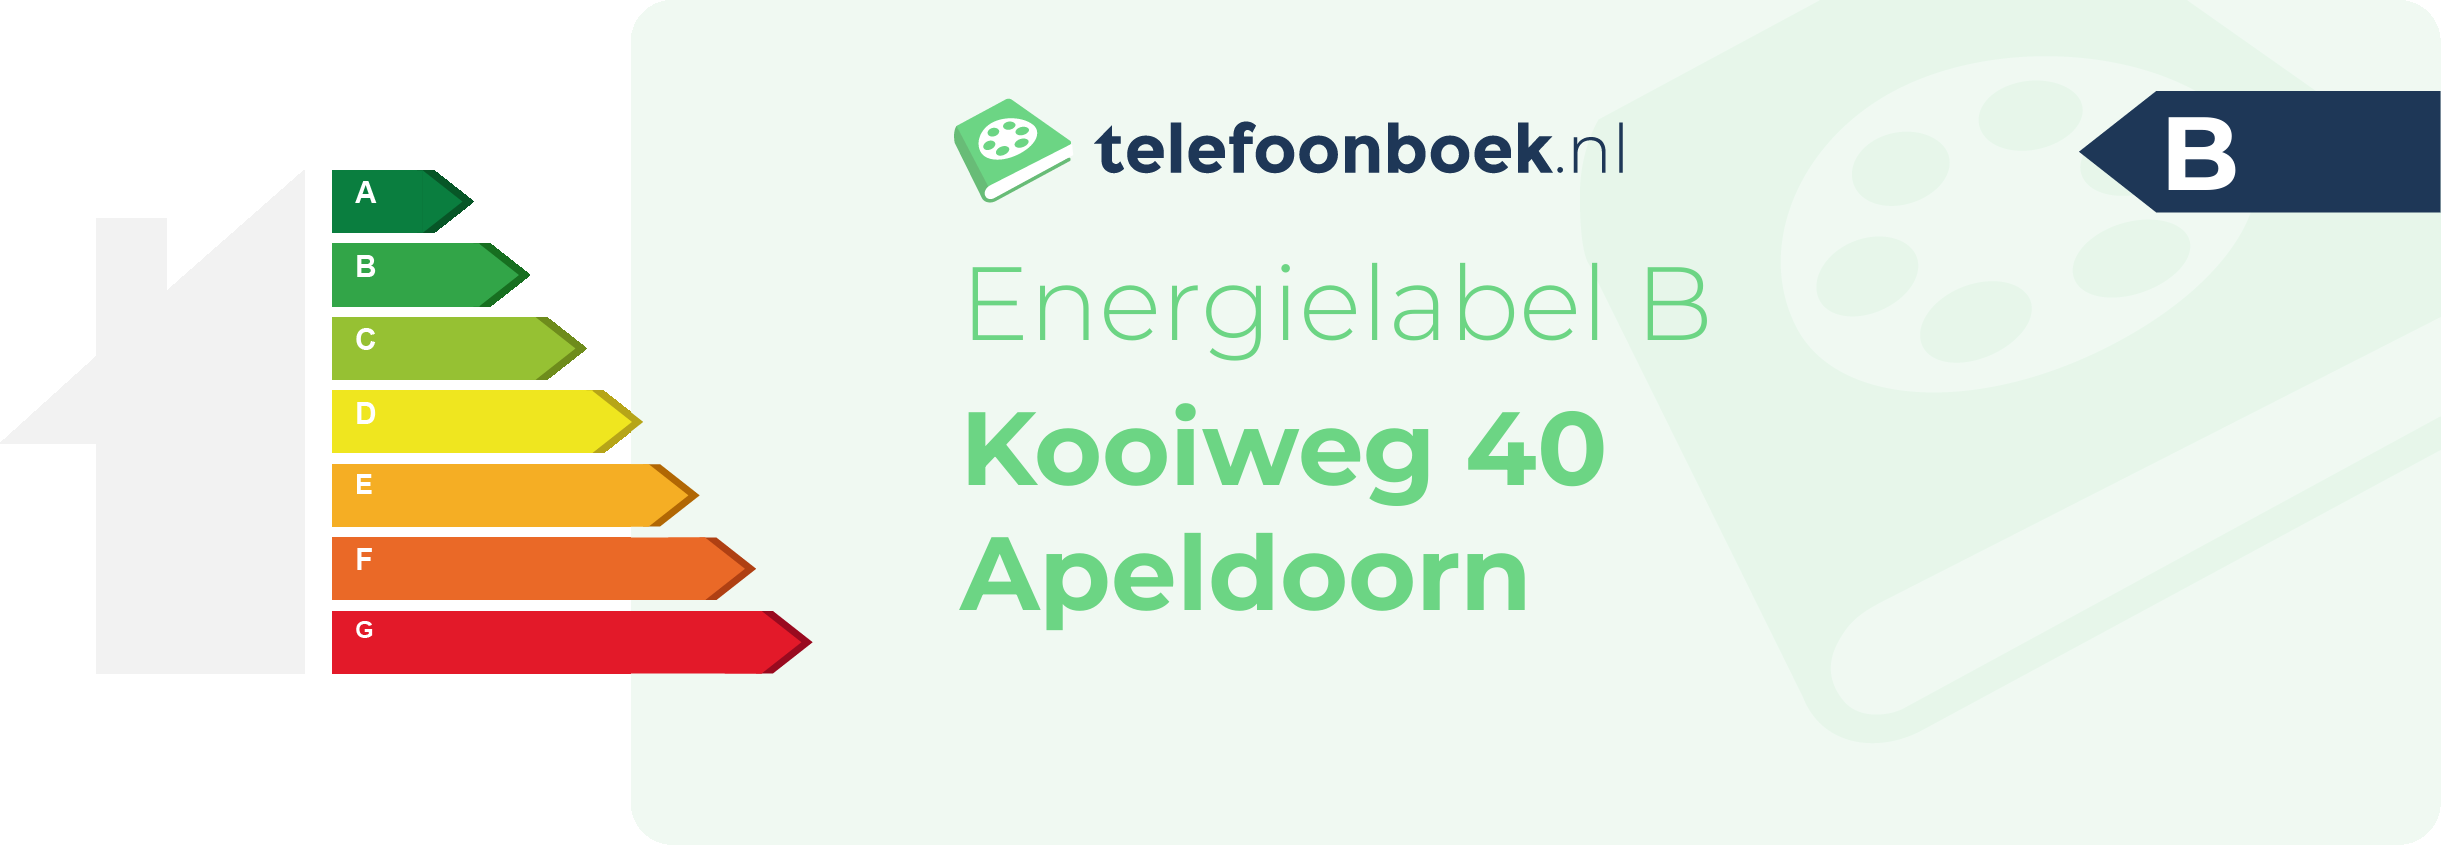 Energielabel Kooiweg 40 Apeldoorn